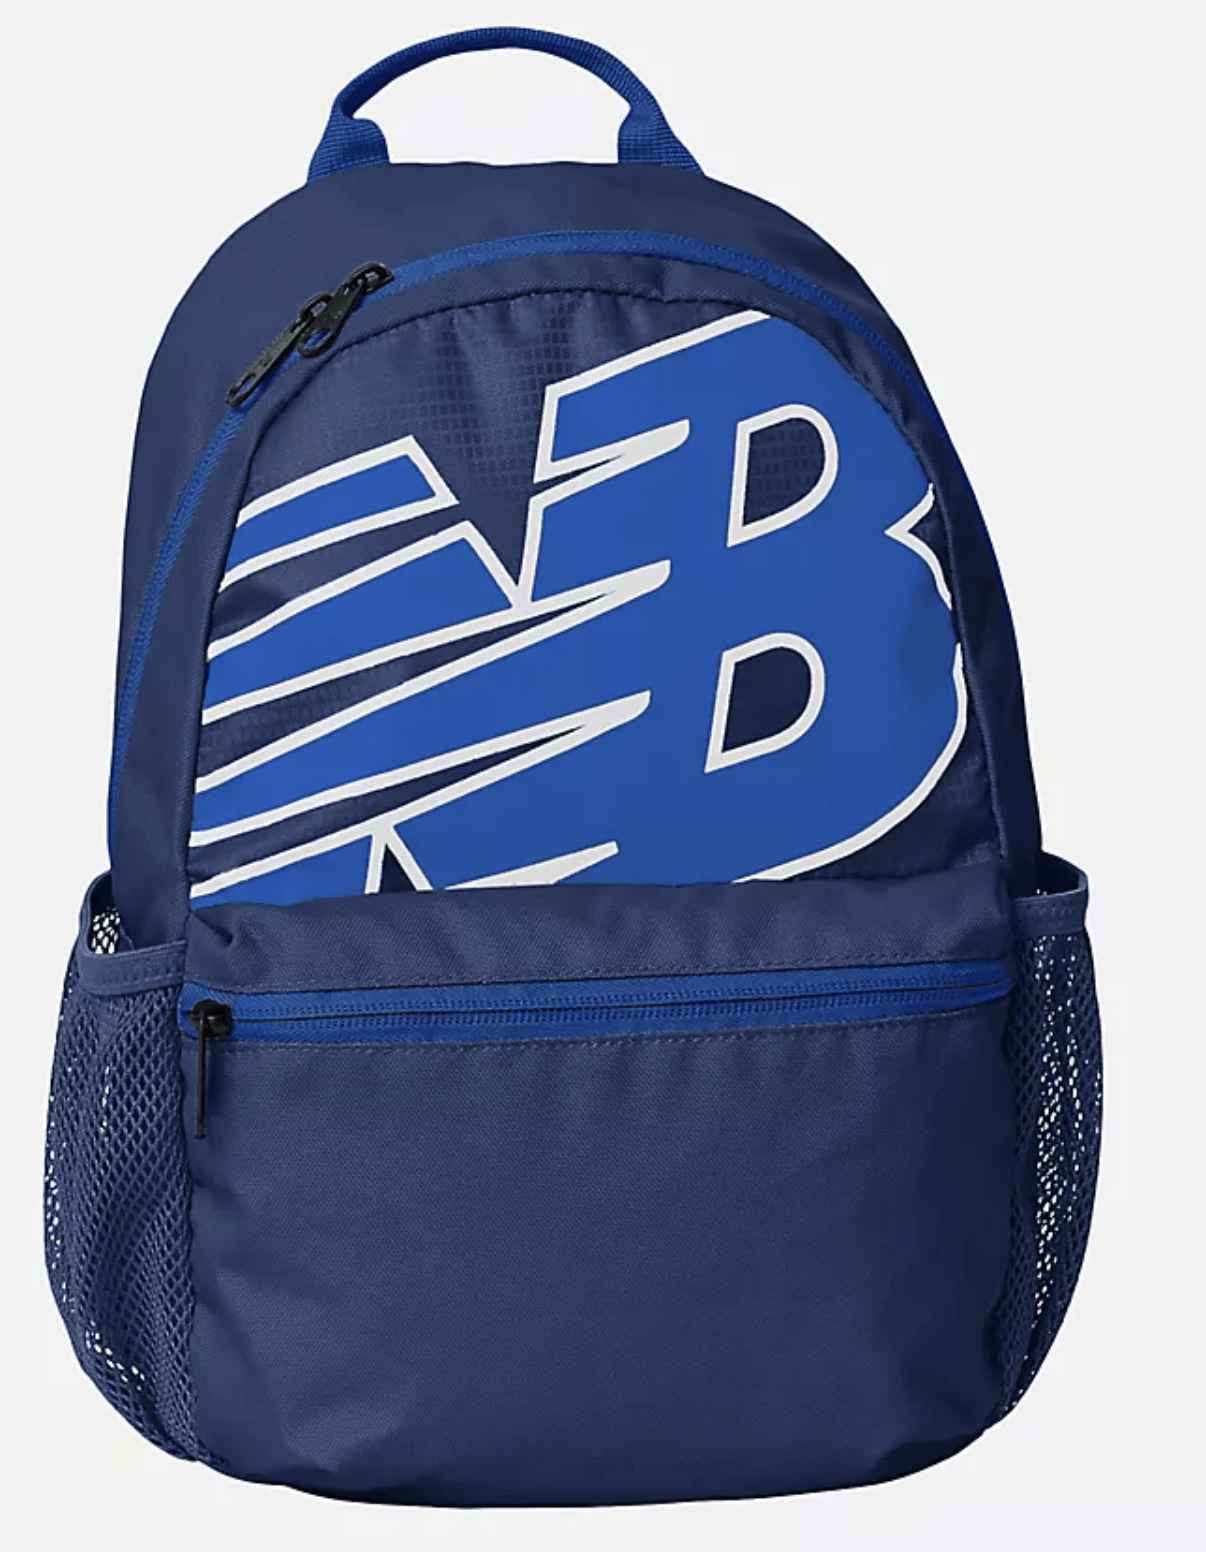 New Balance Kids Backpack Blue/Blue - Team Rhapsody